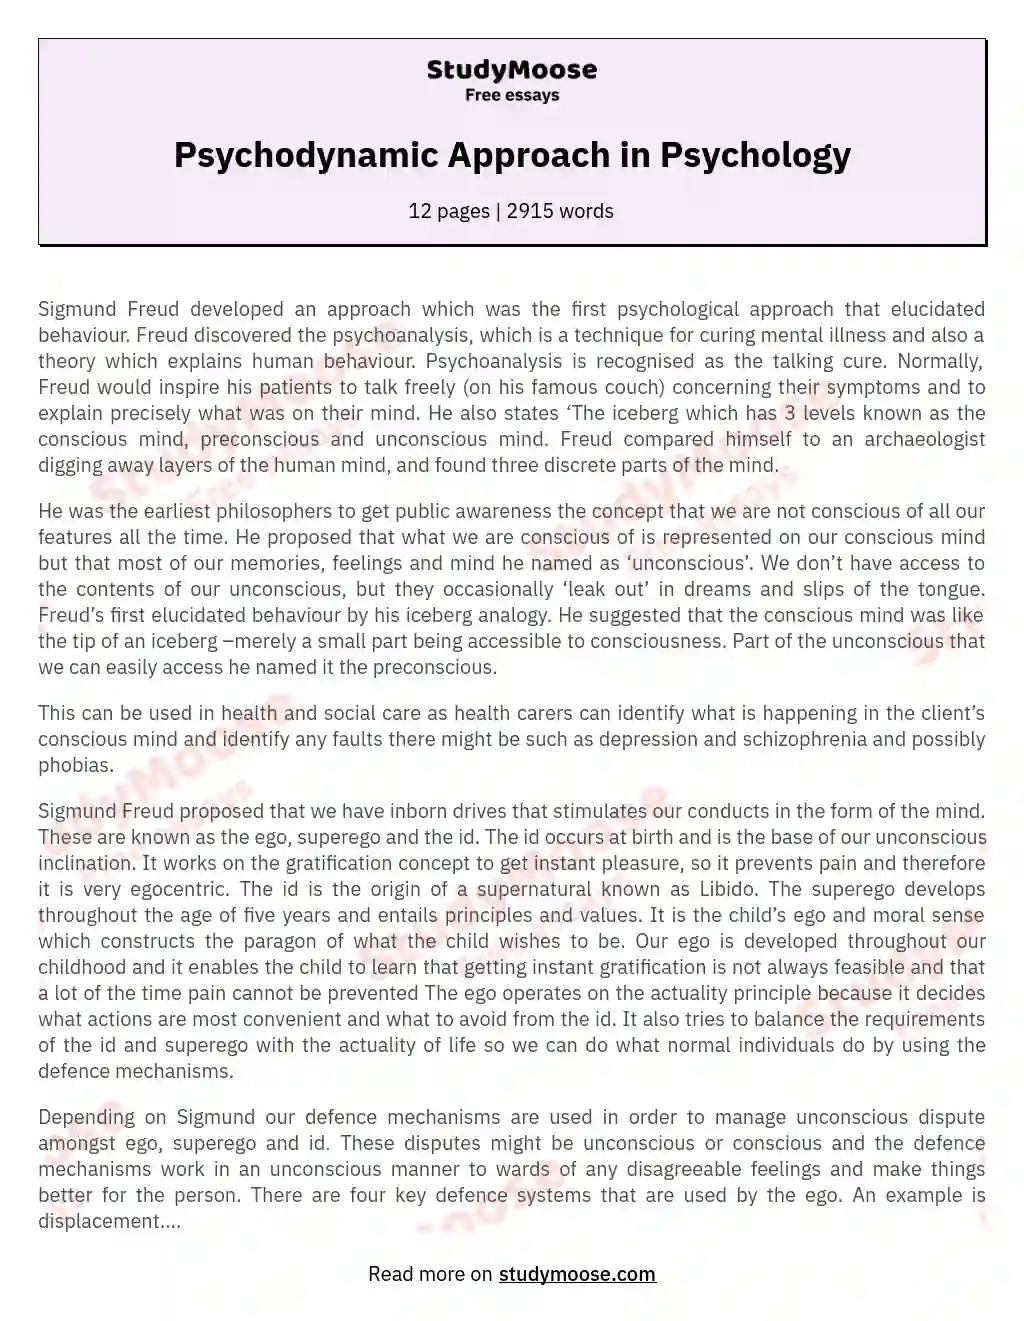 psychodynamic approach evaluation essay